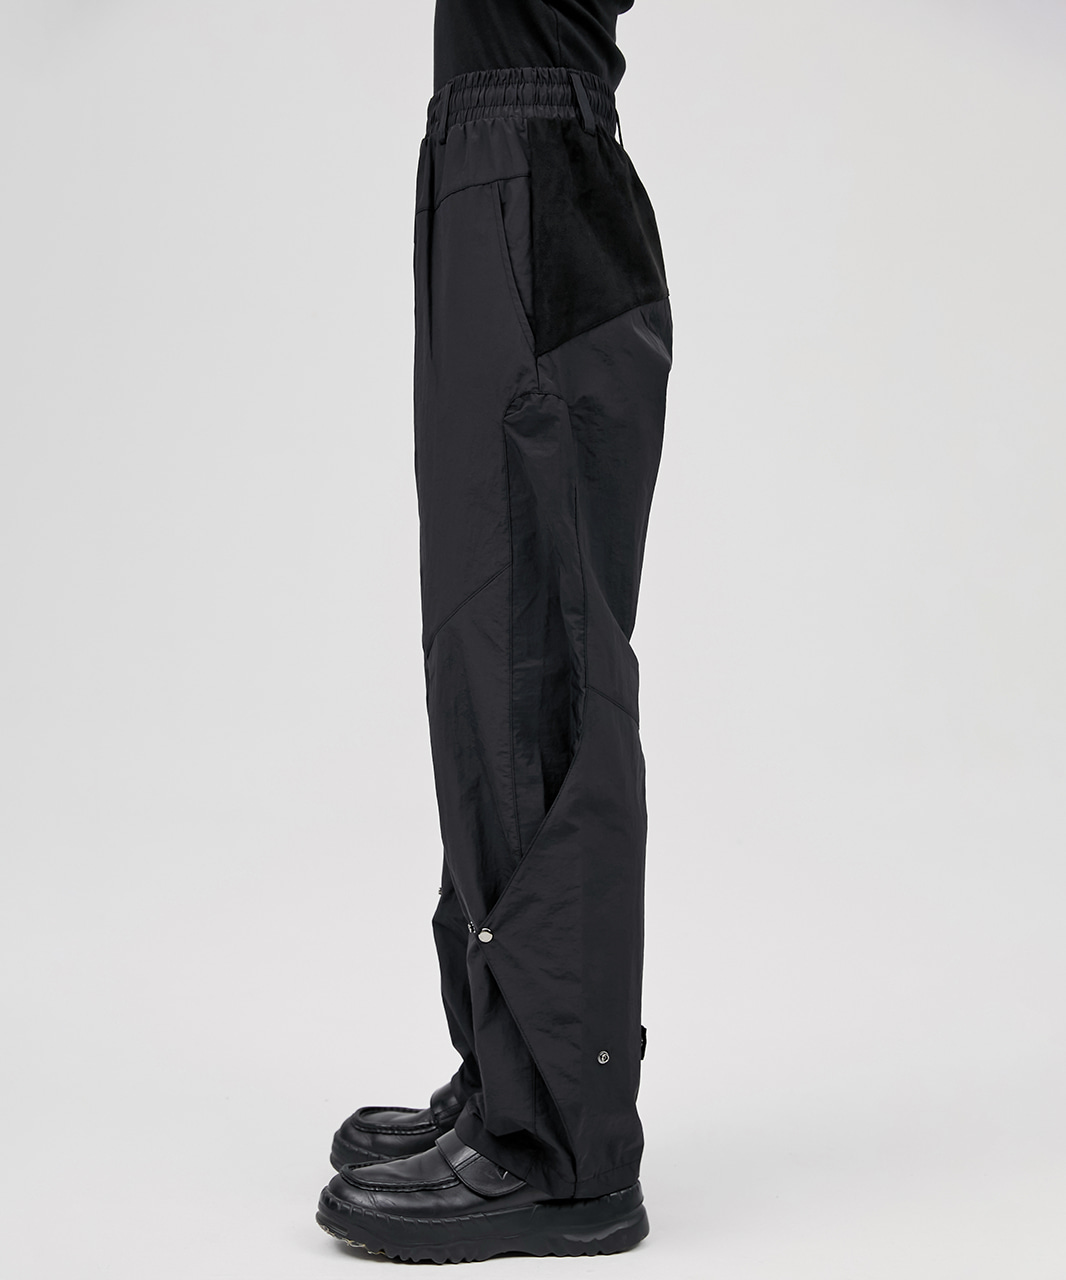 FLARE UP플레어업 Obtuse Triangle Flap Pants - Black (FL-226)